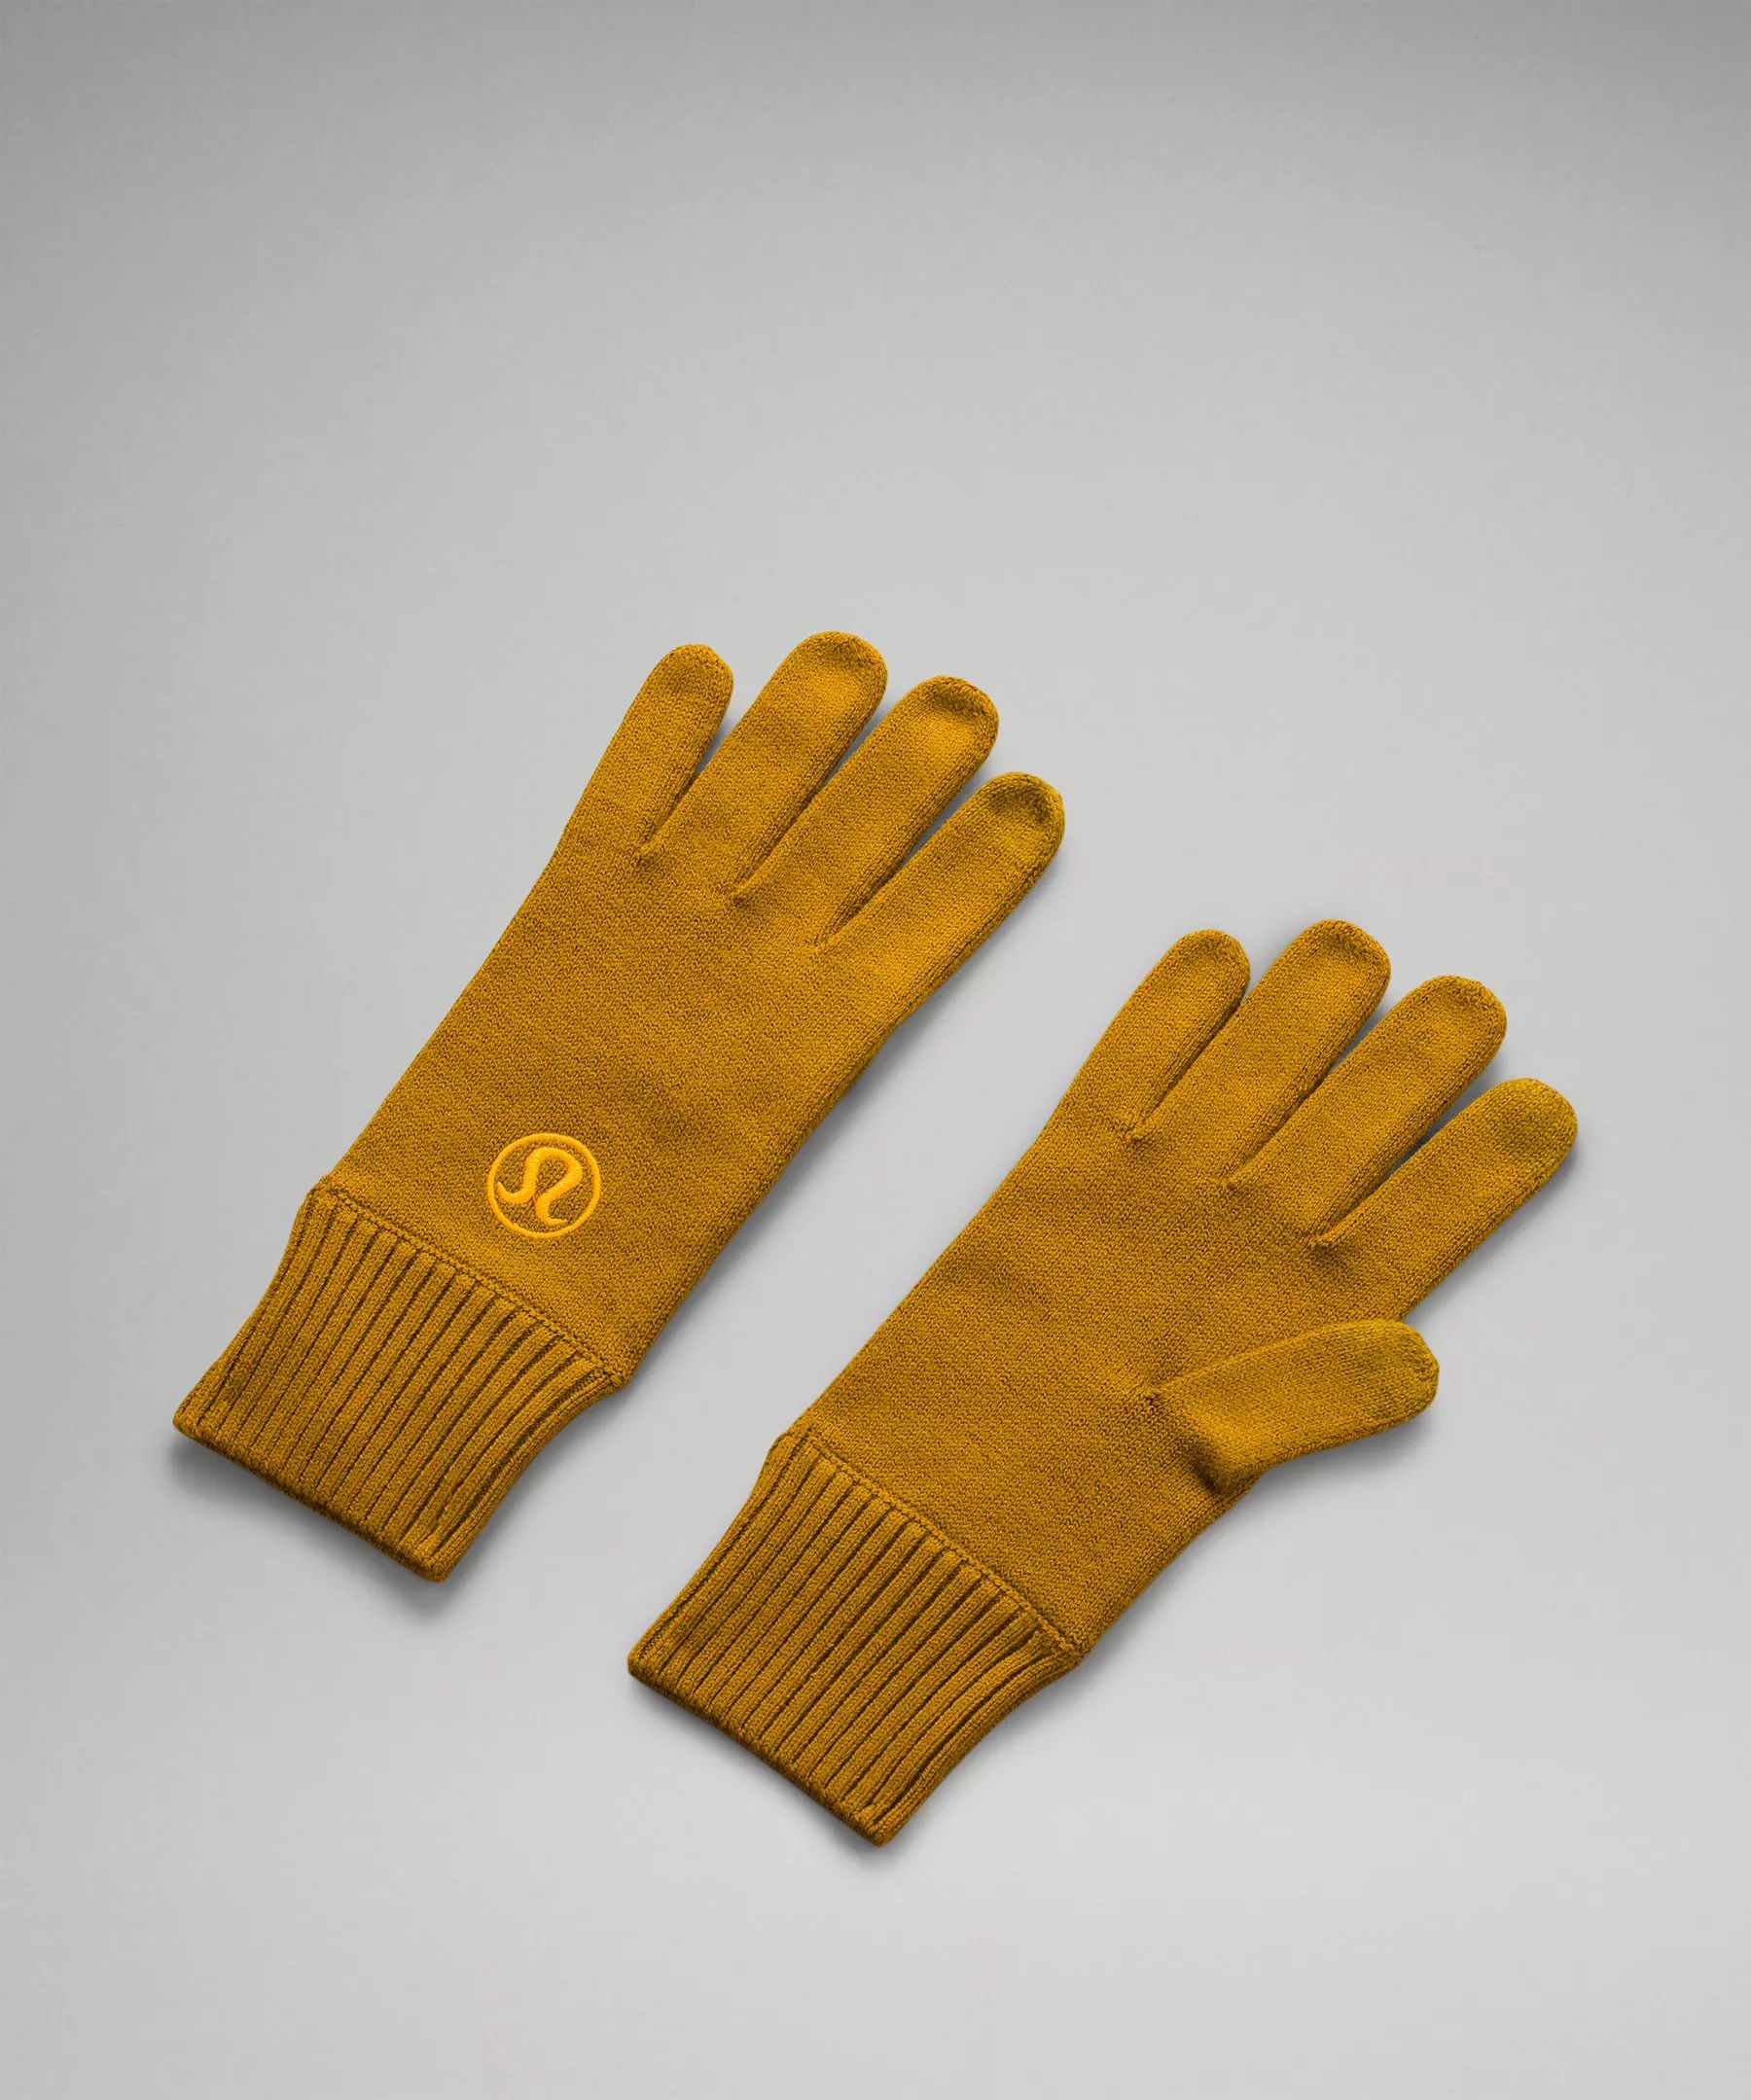 Warm Revelation Gloves Tech | Lululemon (US)